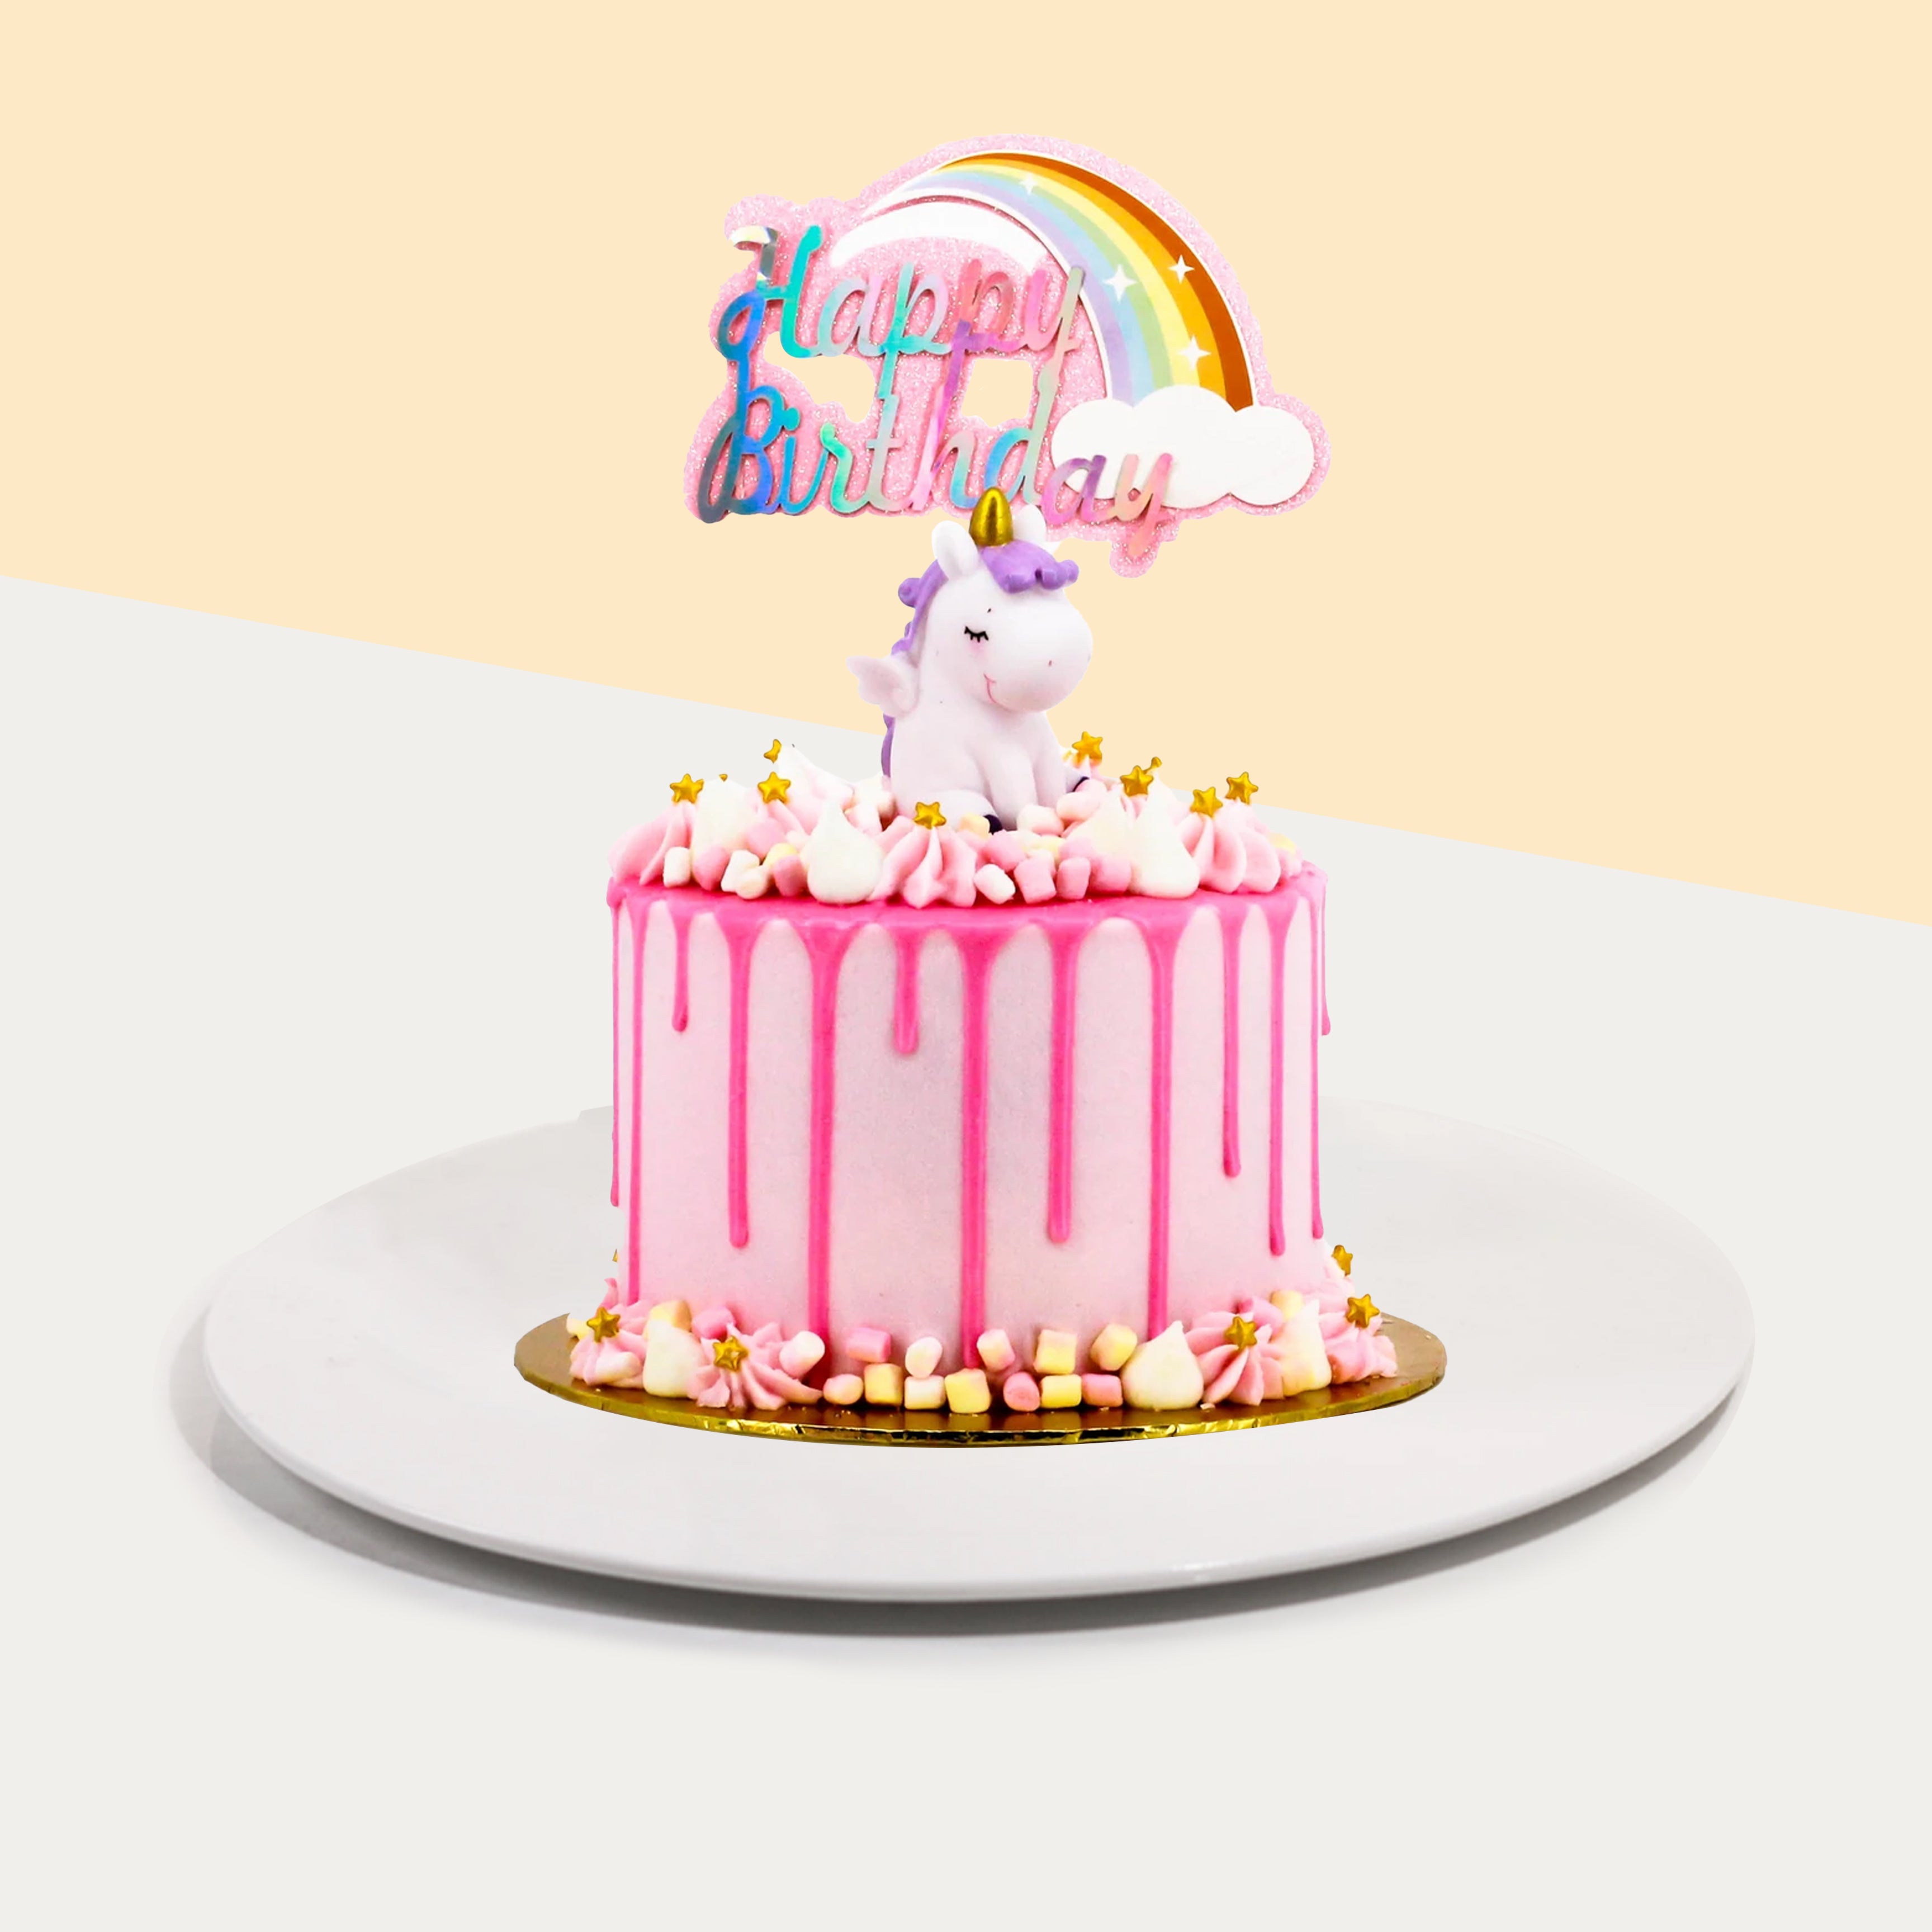 No-Bake Unicorn Cake | Recipe - Rachael Ray Show